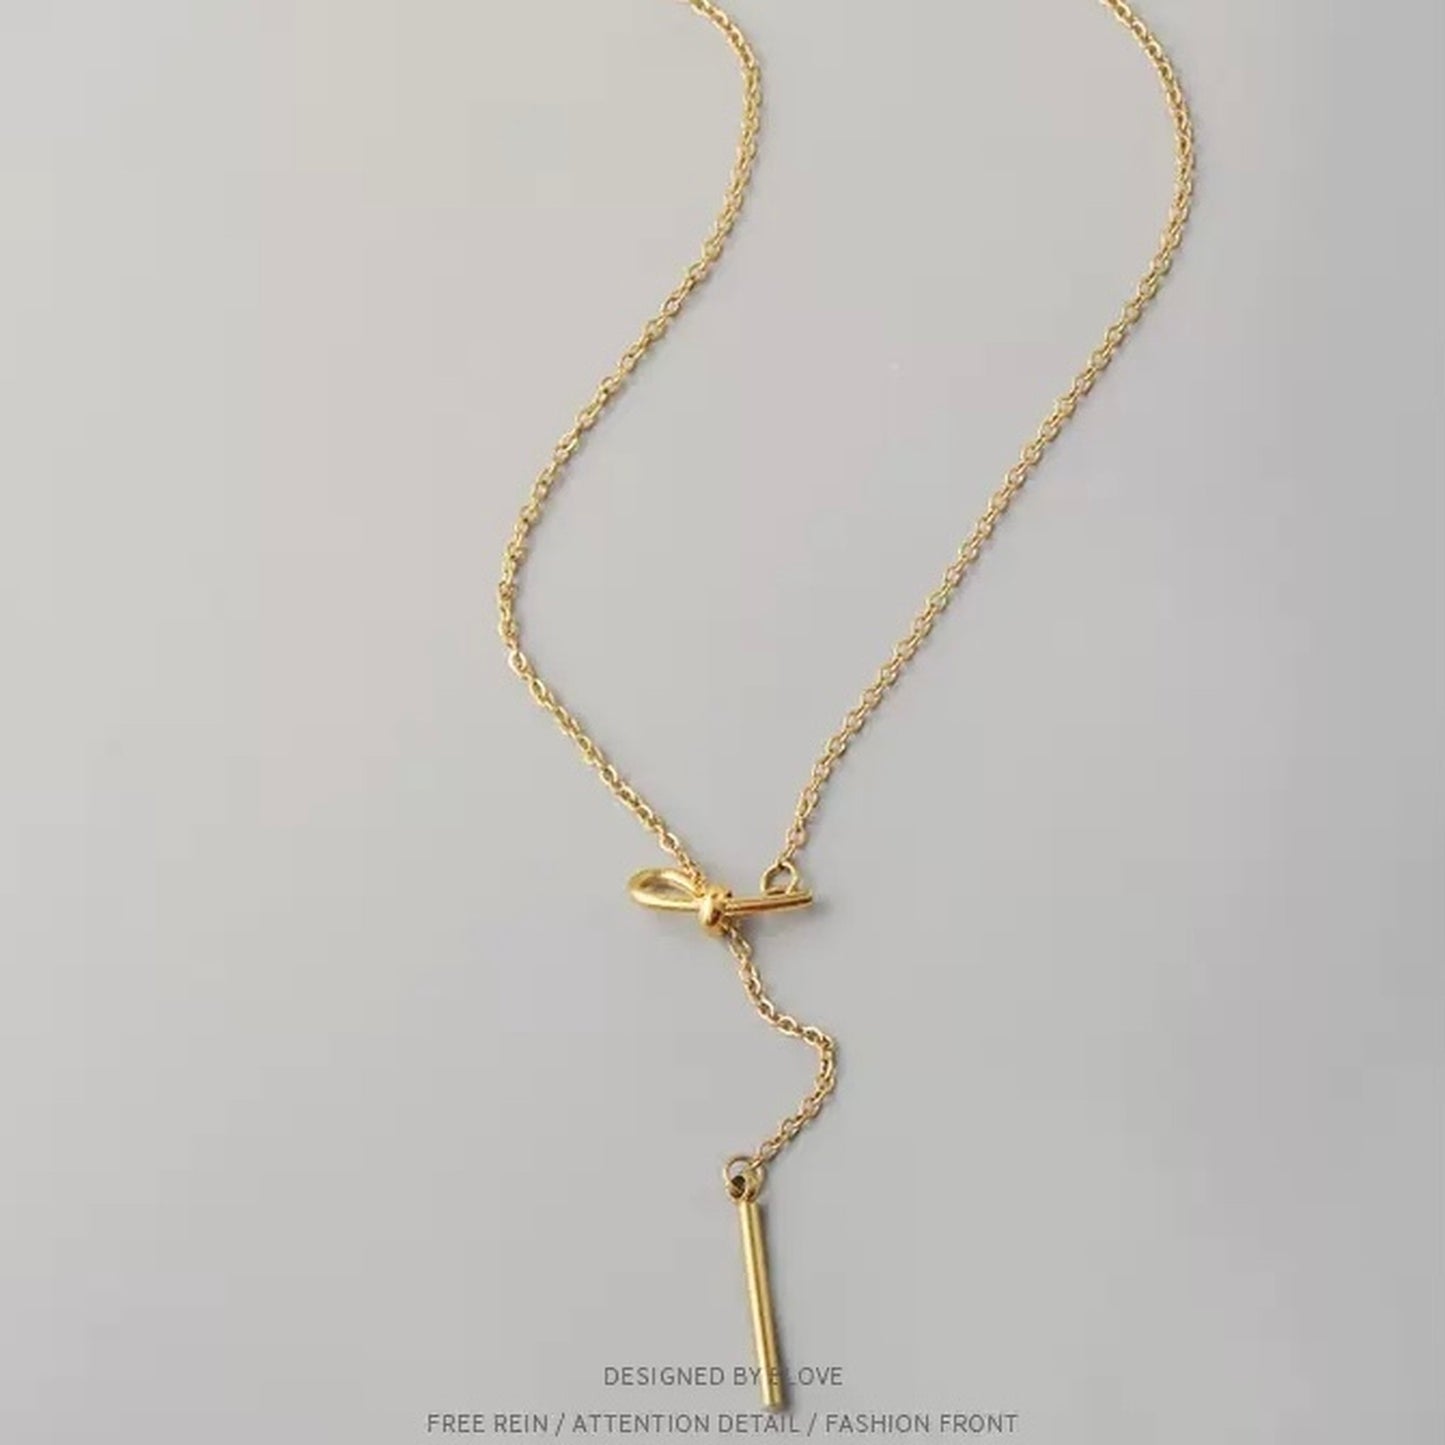 Tassel necklace 8842